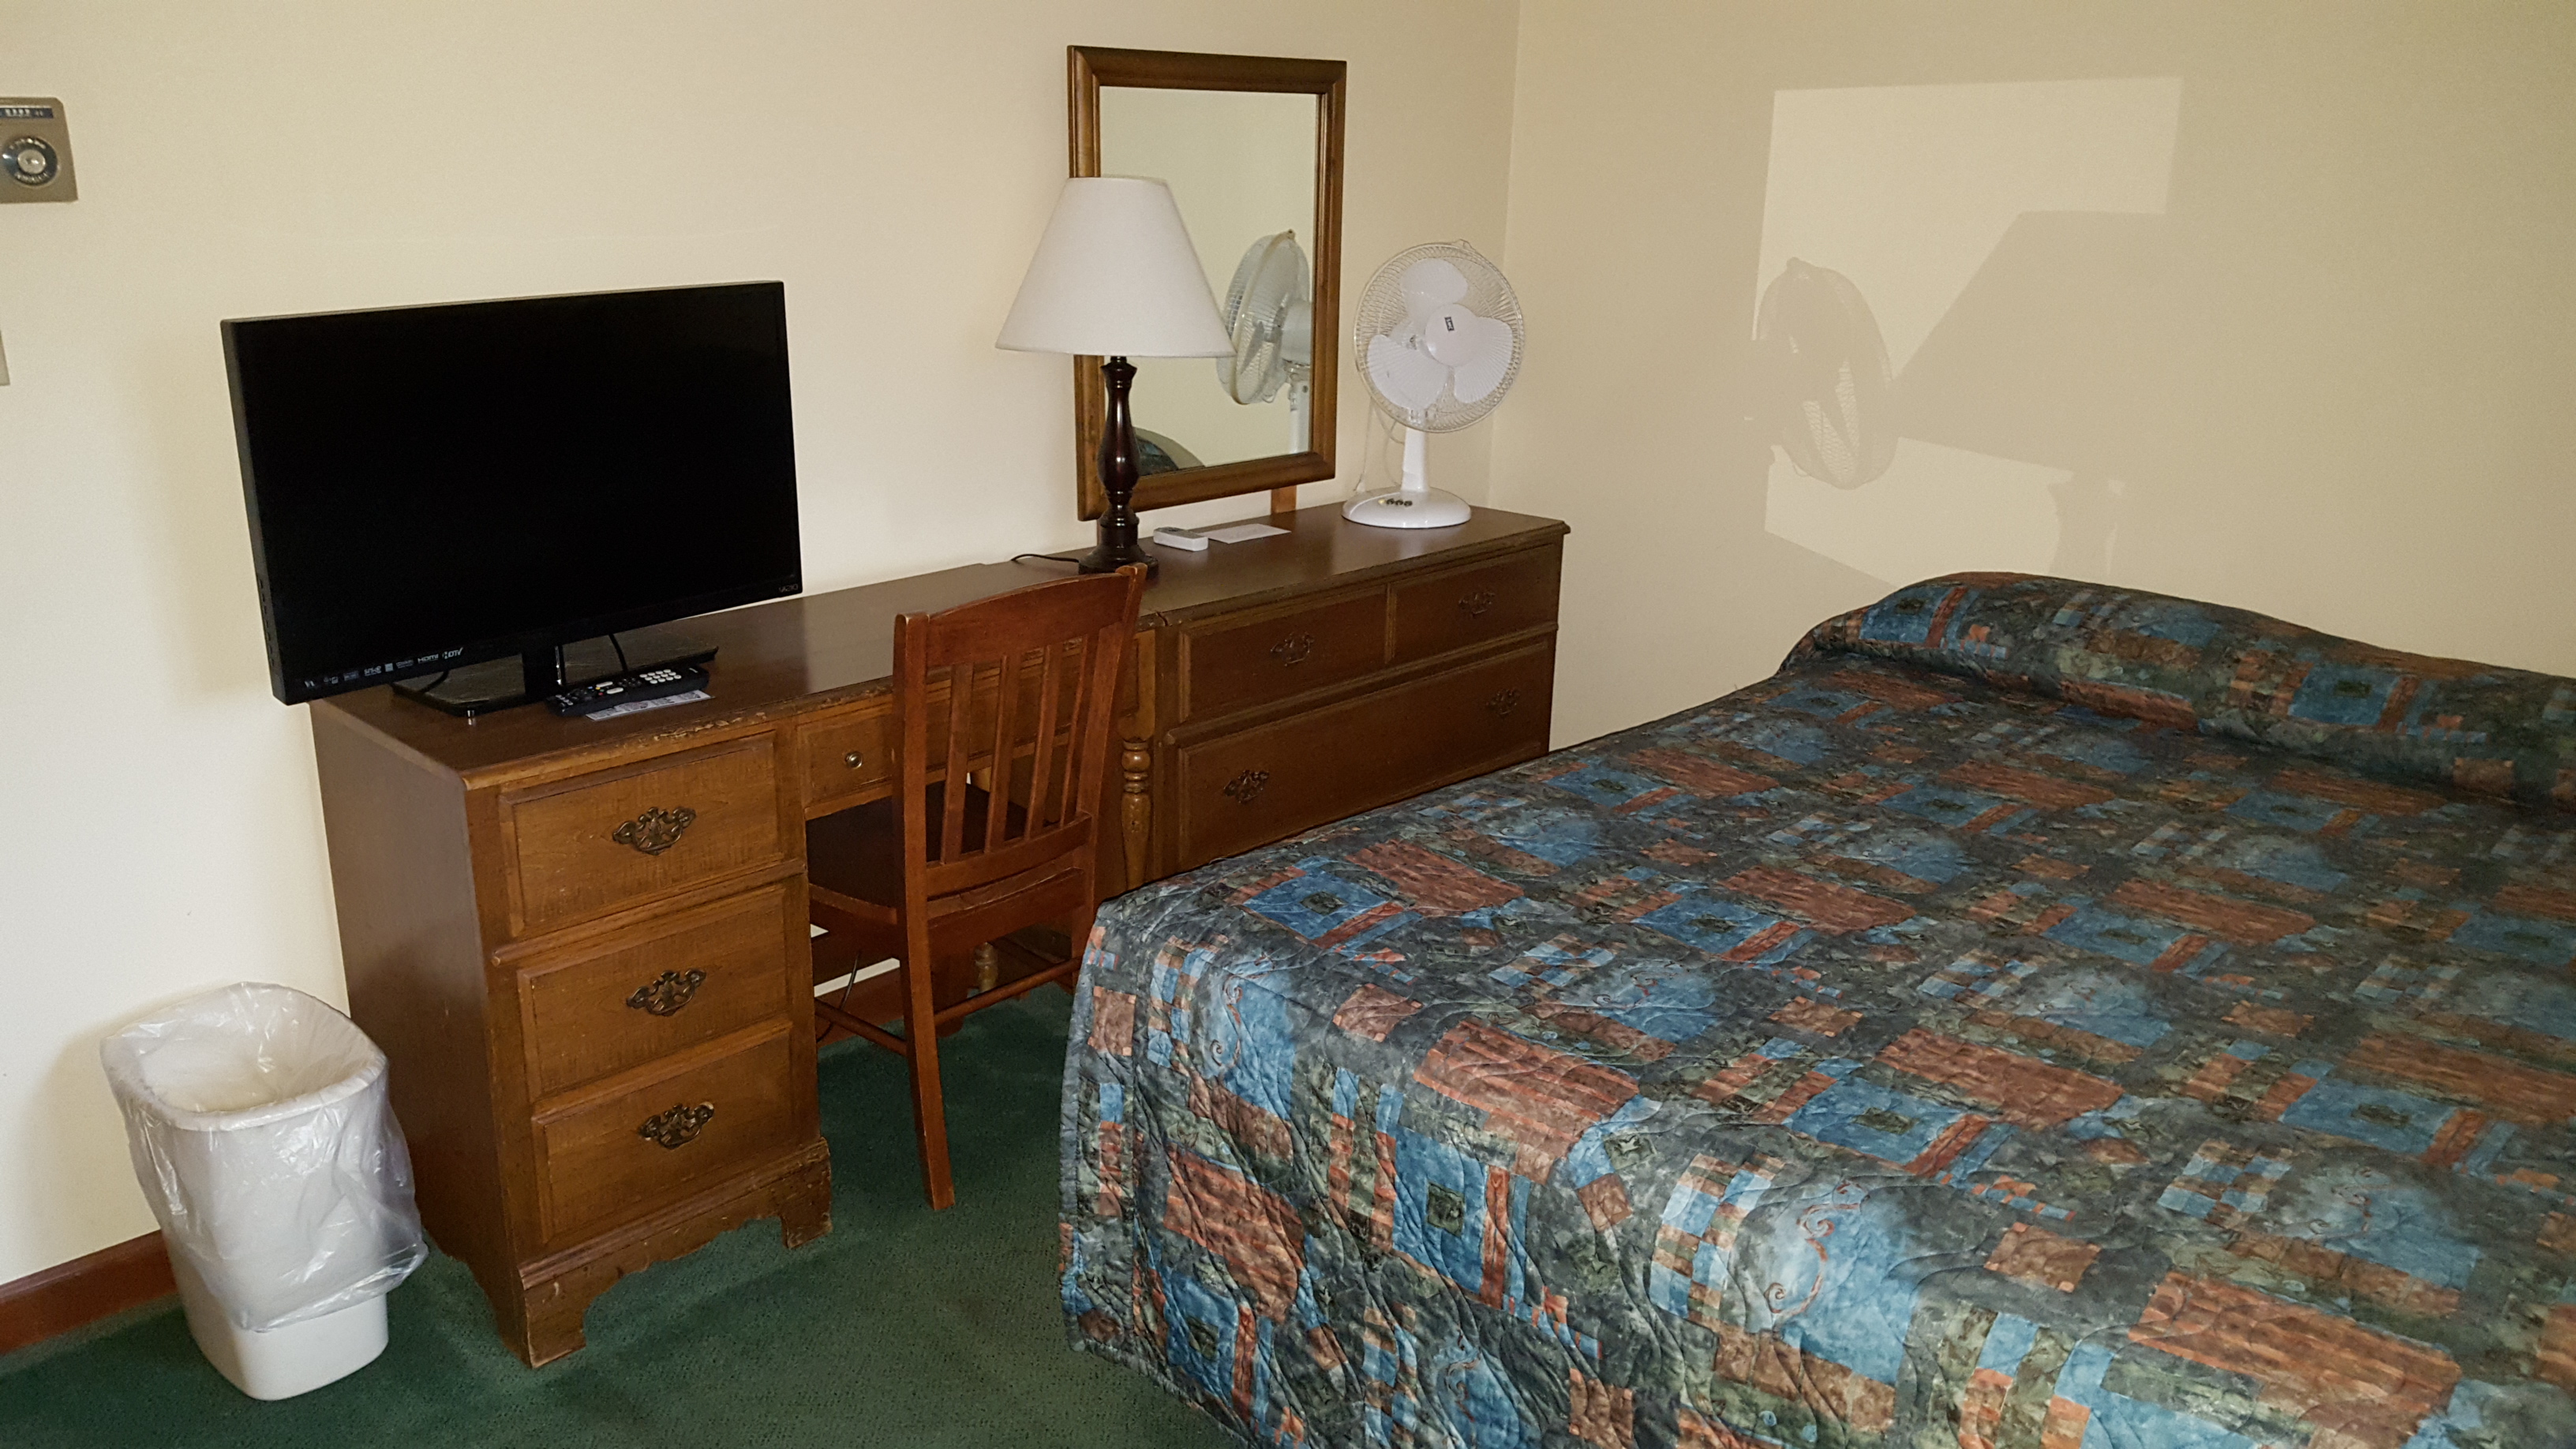 Motel 3 room with bed and desk/dresser.